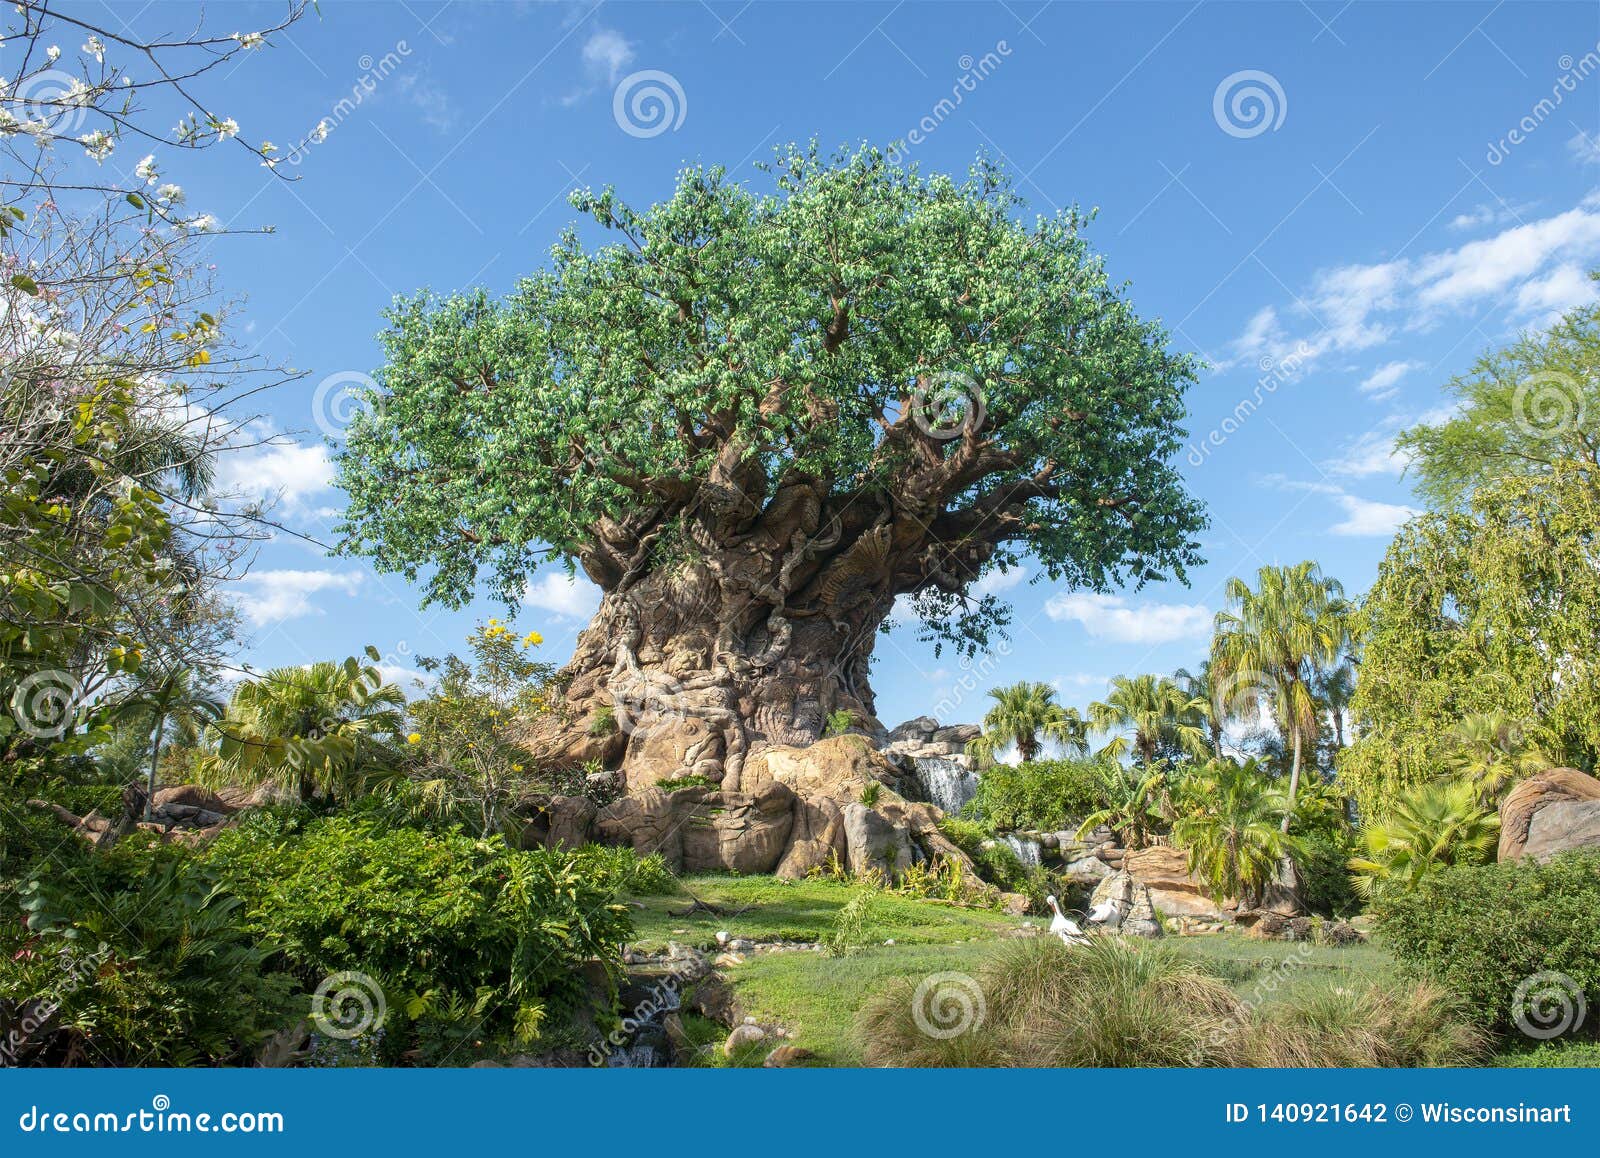 1,024 Disney Animal Kingdom Tree Stock Photos - Free & Royalty-Free Stock  Photos from Dreamstime